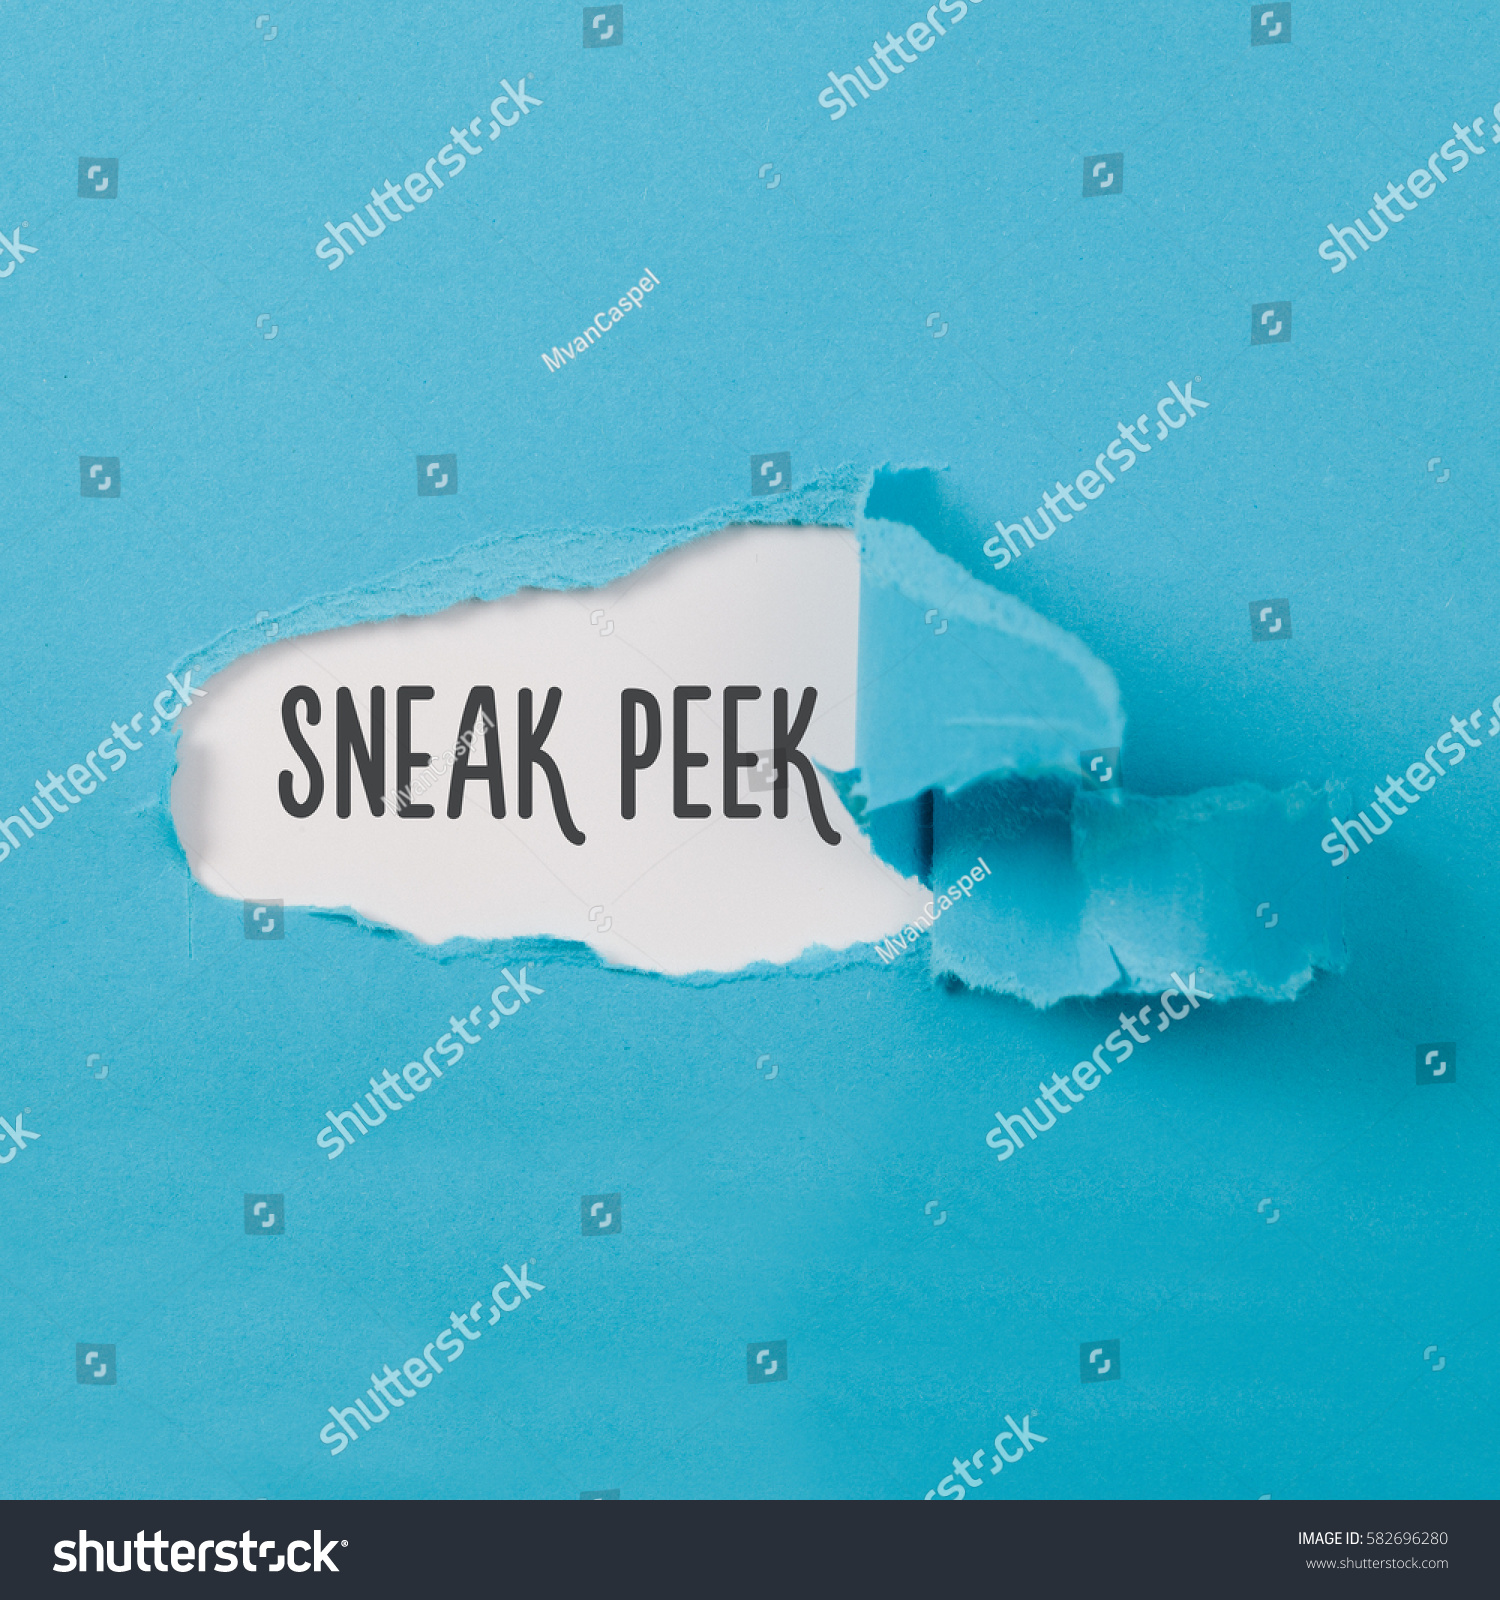 Sneak Peek message on torn blue paper revealing secret behind ripped opening. #582696280